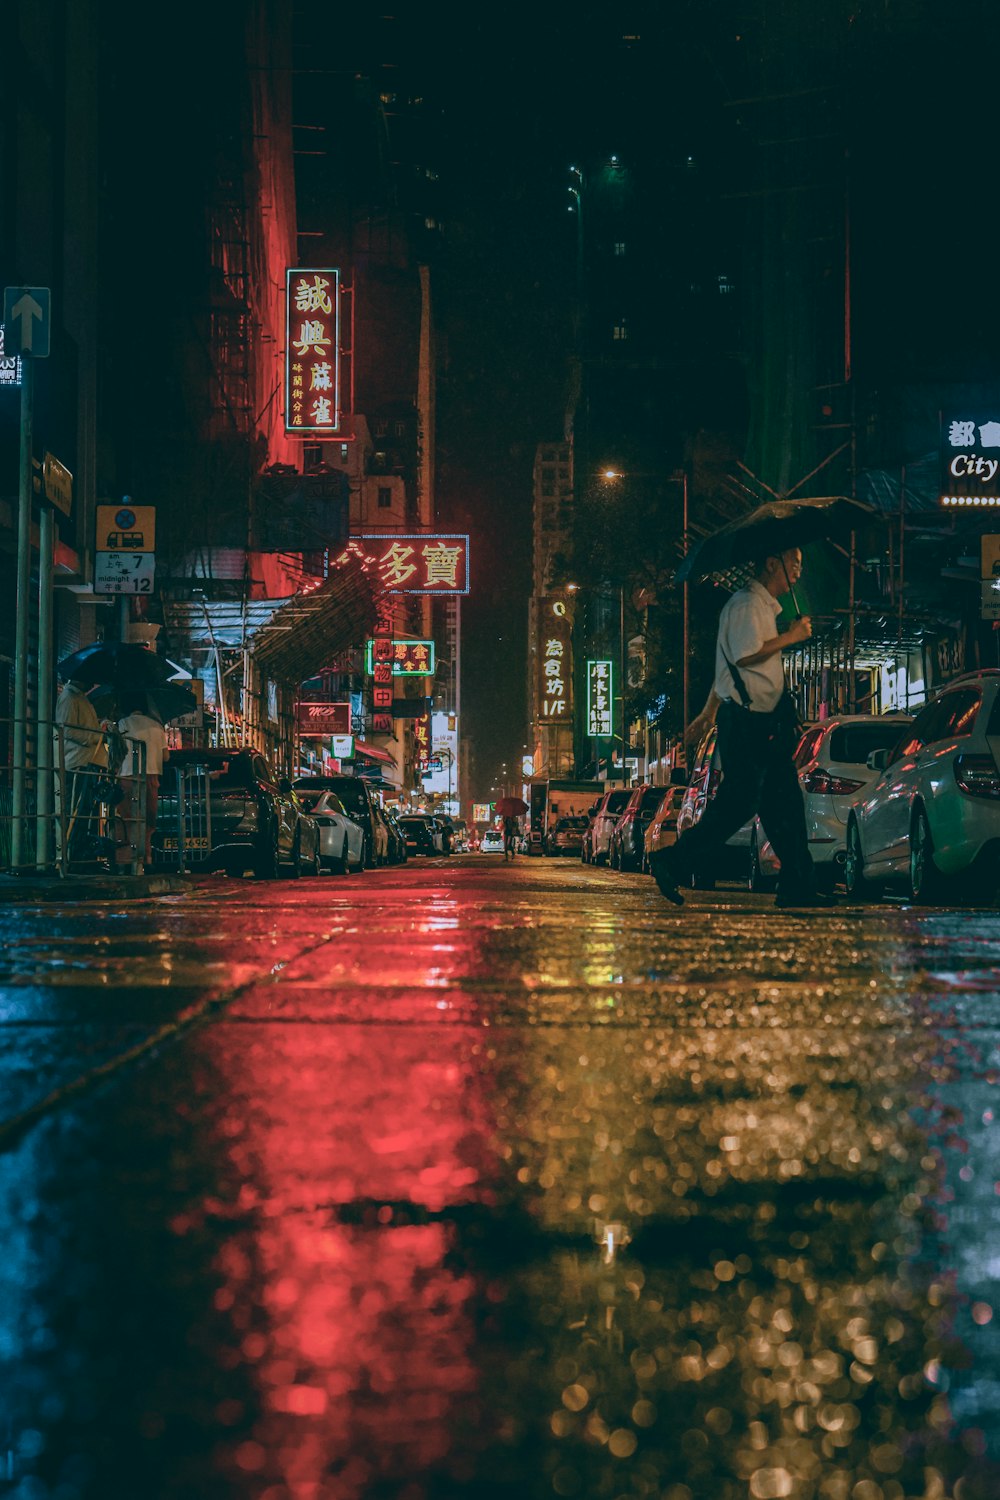 a man walking down a street at night with an umbrella